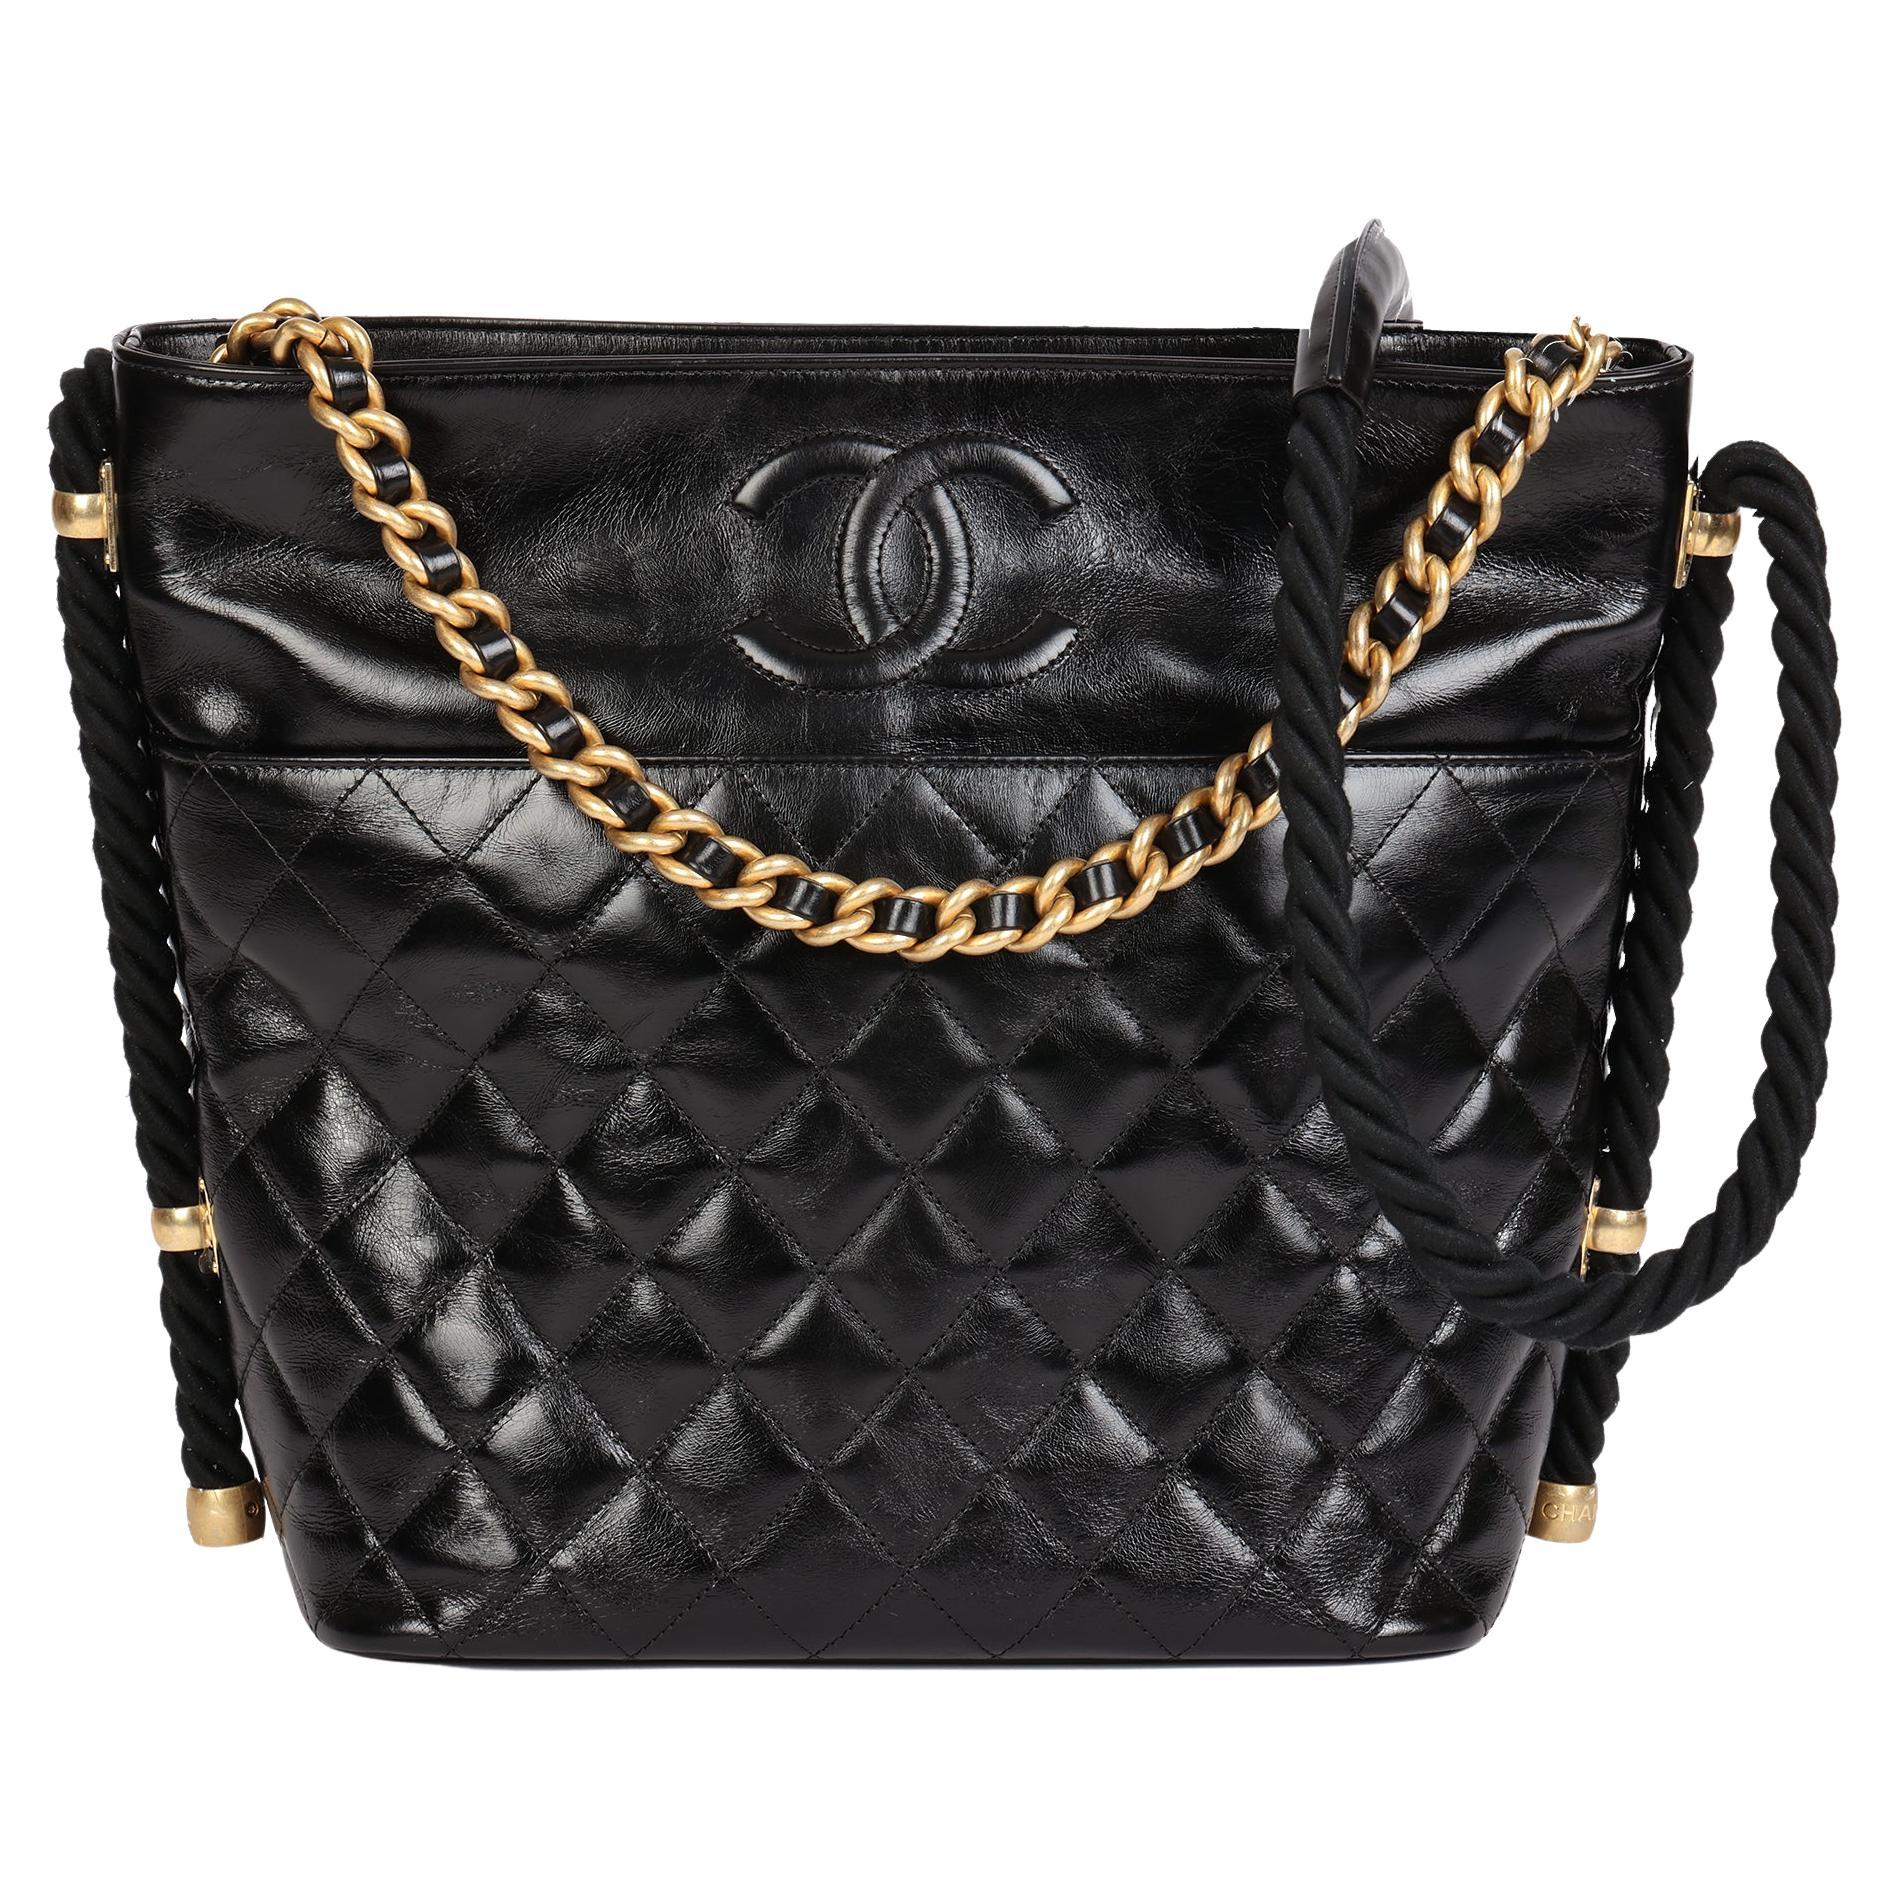 Chanel Black Aged Calfskin Quilted Medium Gabrielle Hobo Bag rt $4